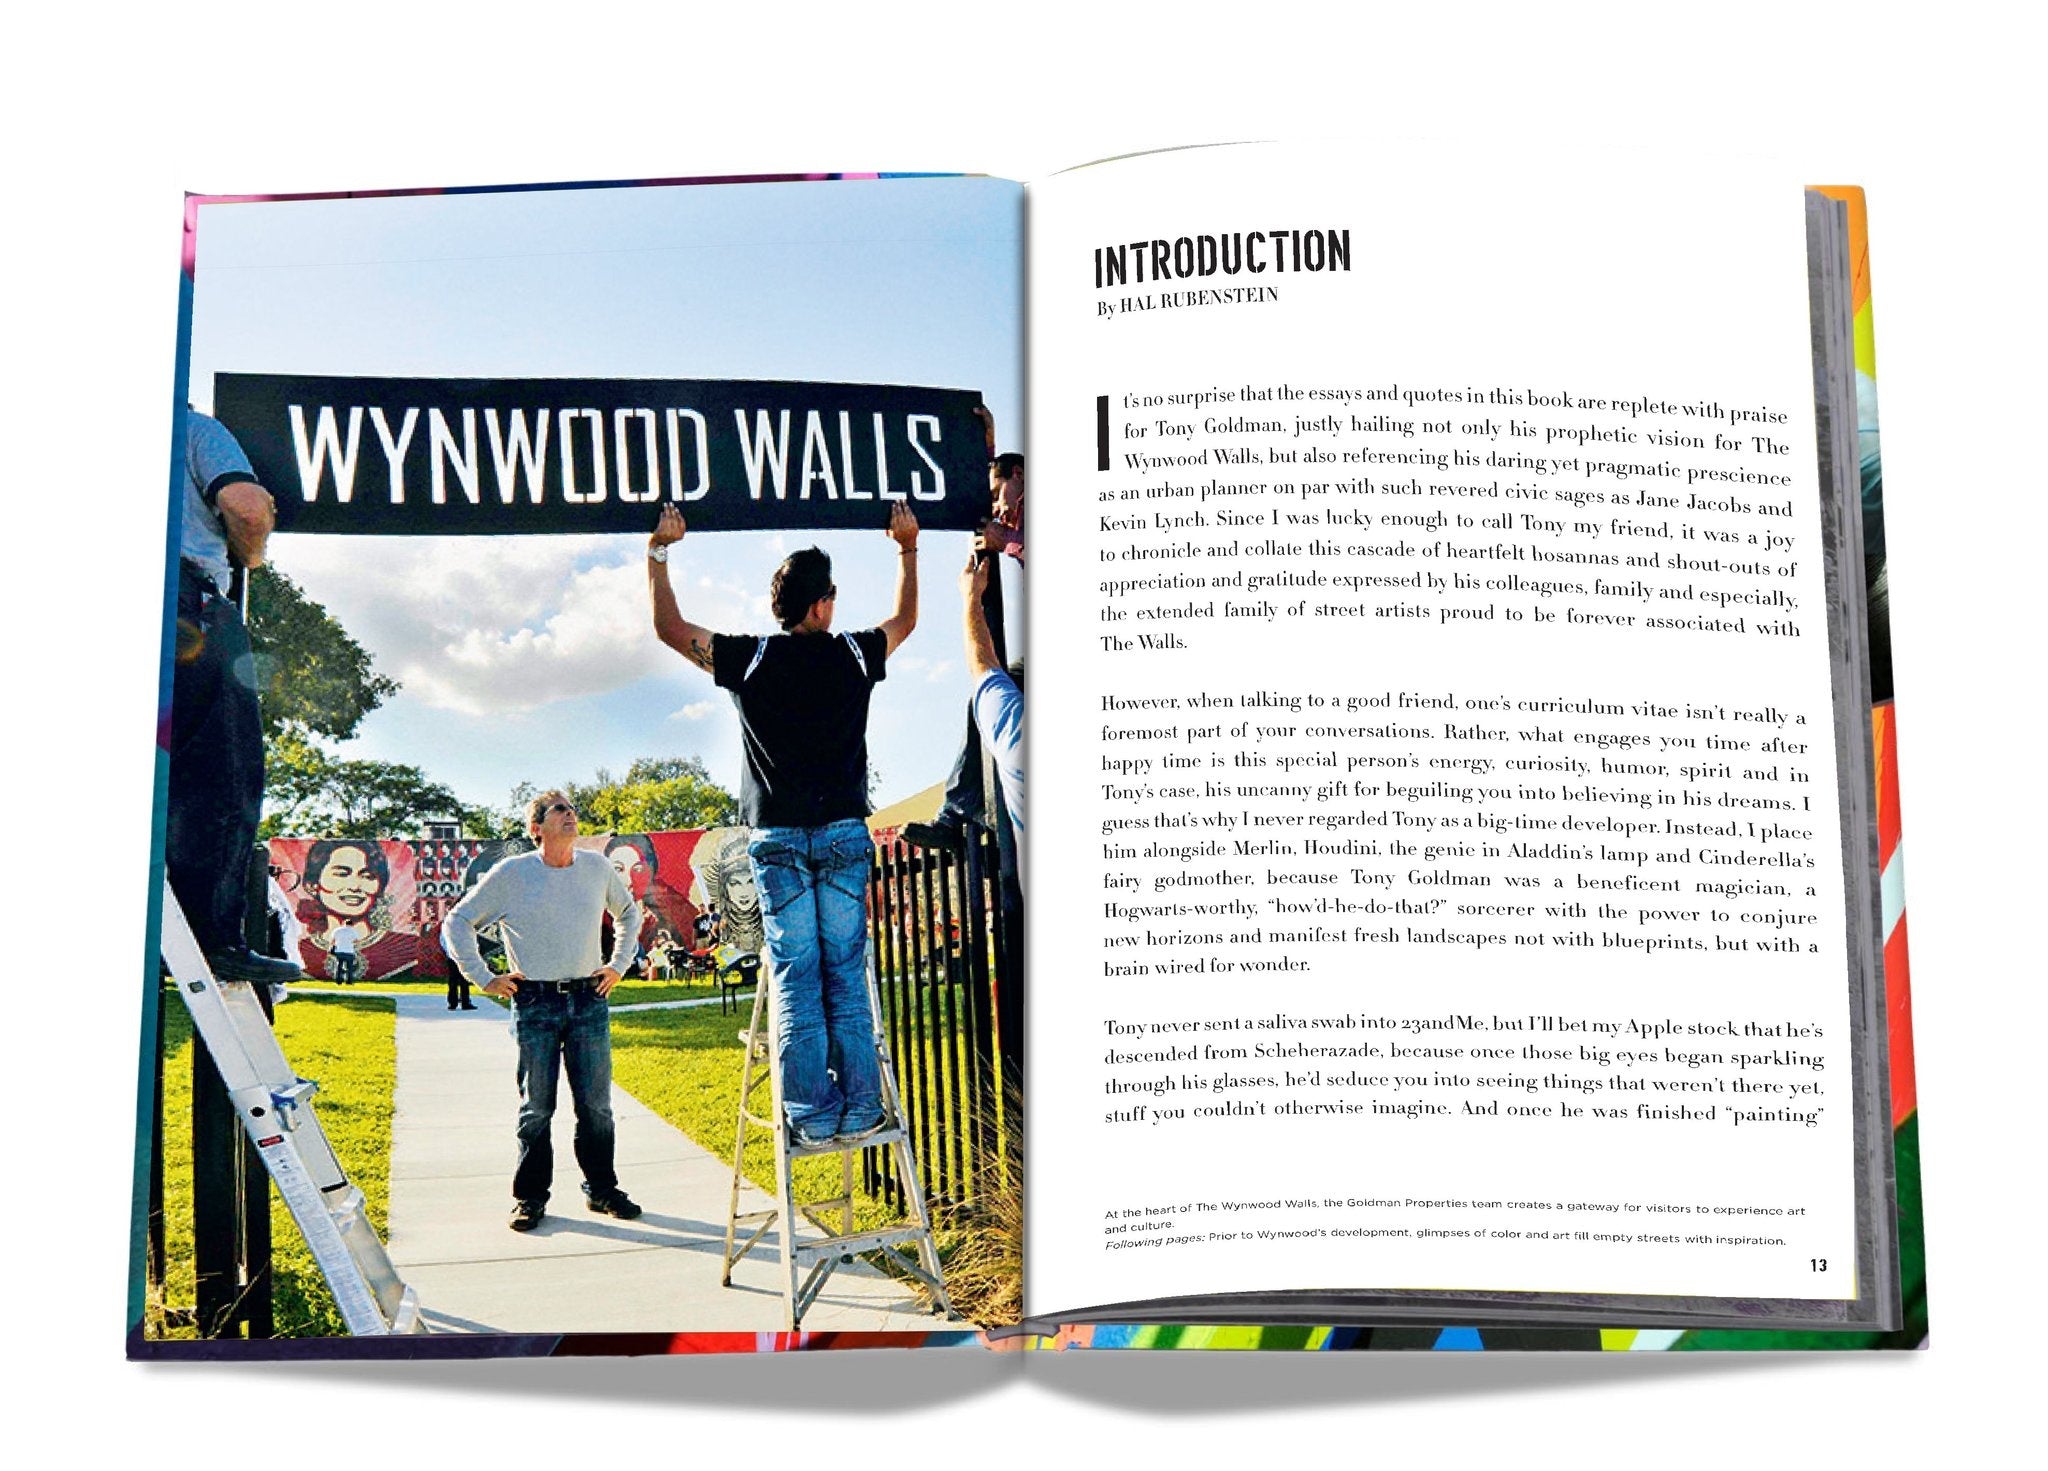 Walls of Change: The Story of the Wynwood Walls - Wynwood Walls Shop